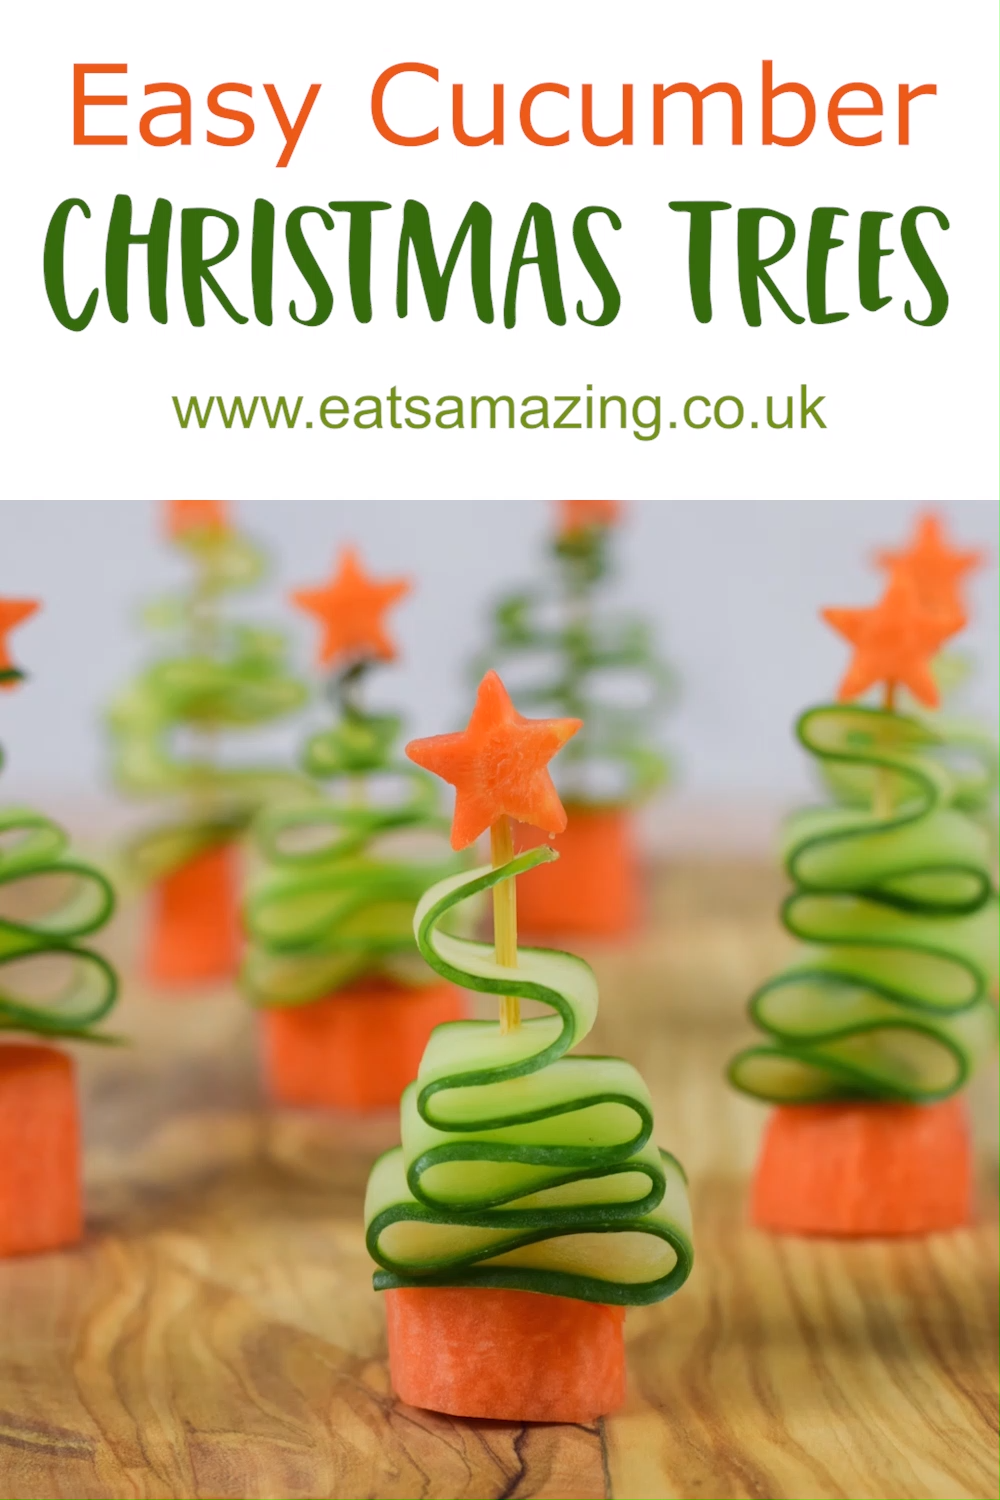 Easy Cucumber Christmas Trees Recipe - Easy Cucumber Christmas Trees Recipe -   19 diy Food for kids ideas